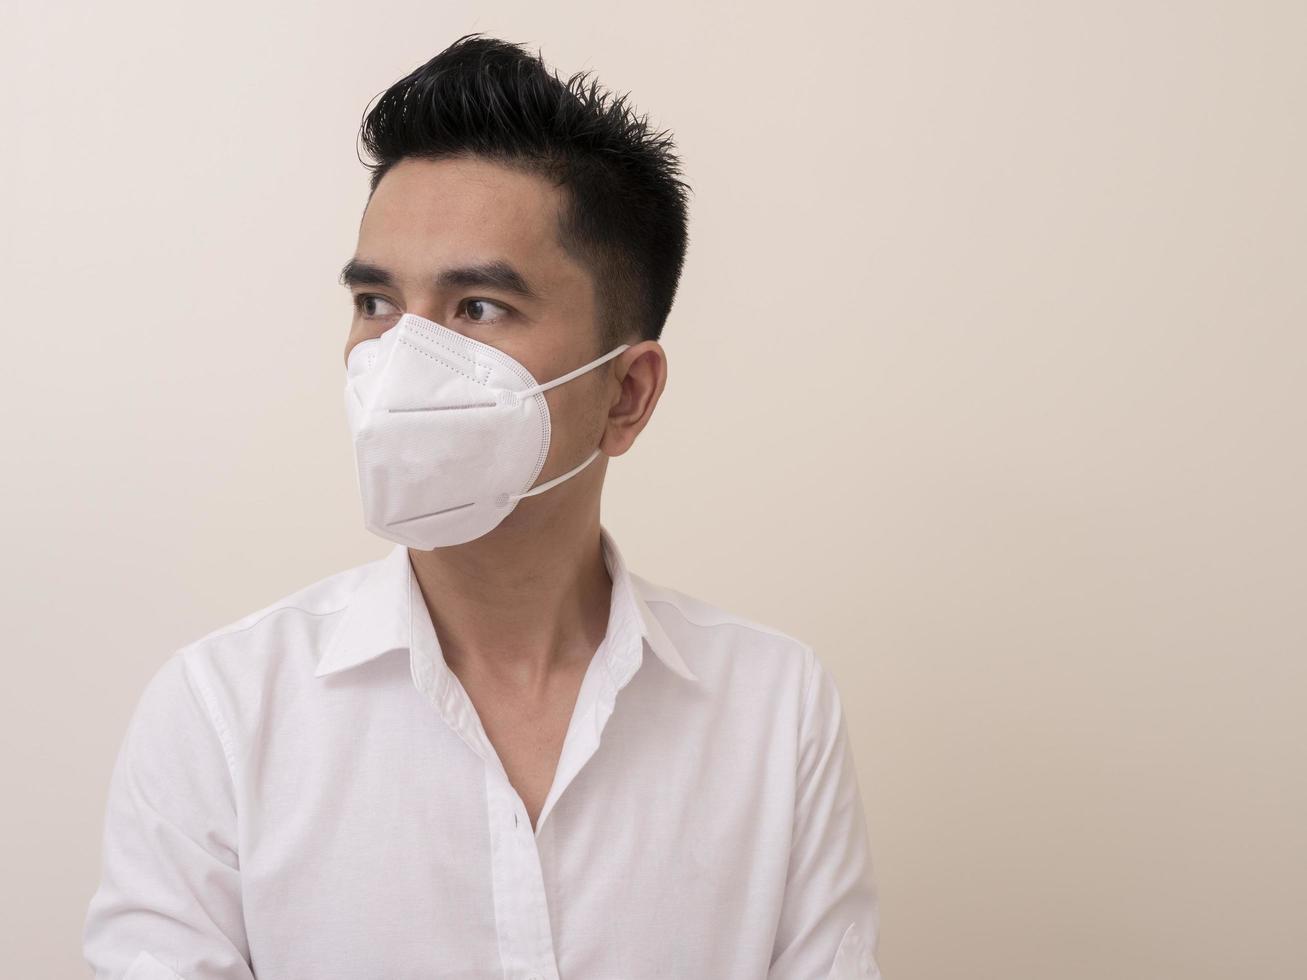 jovem asiático de camisa branca e máscara médica para proteger covid-19 foto